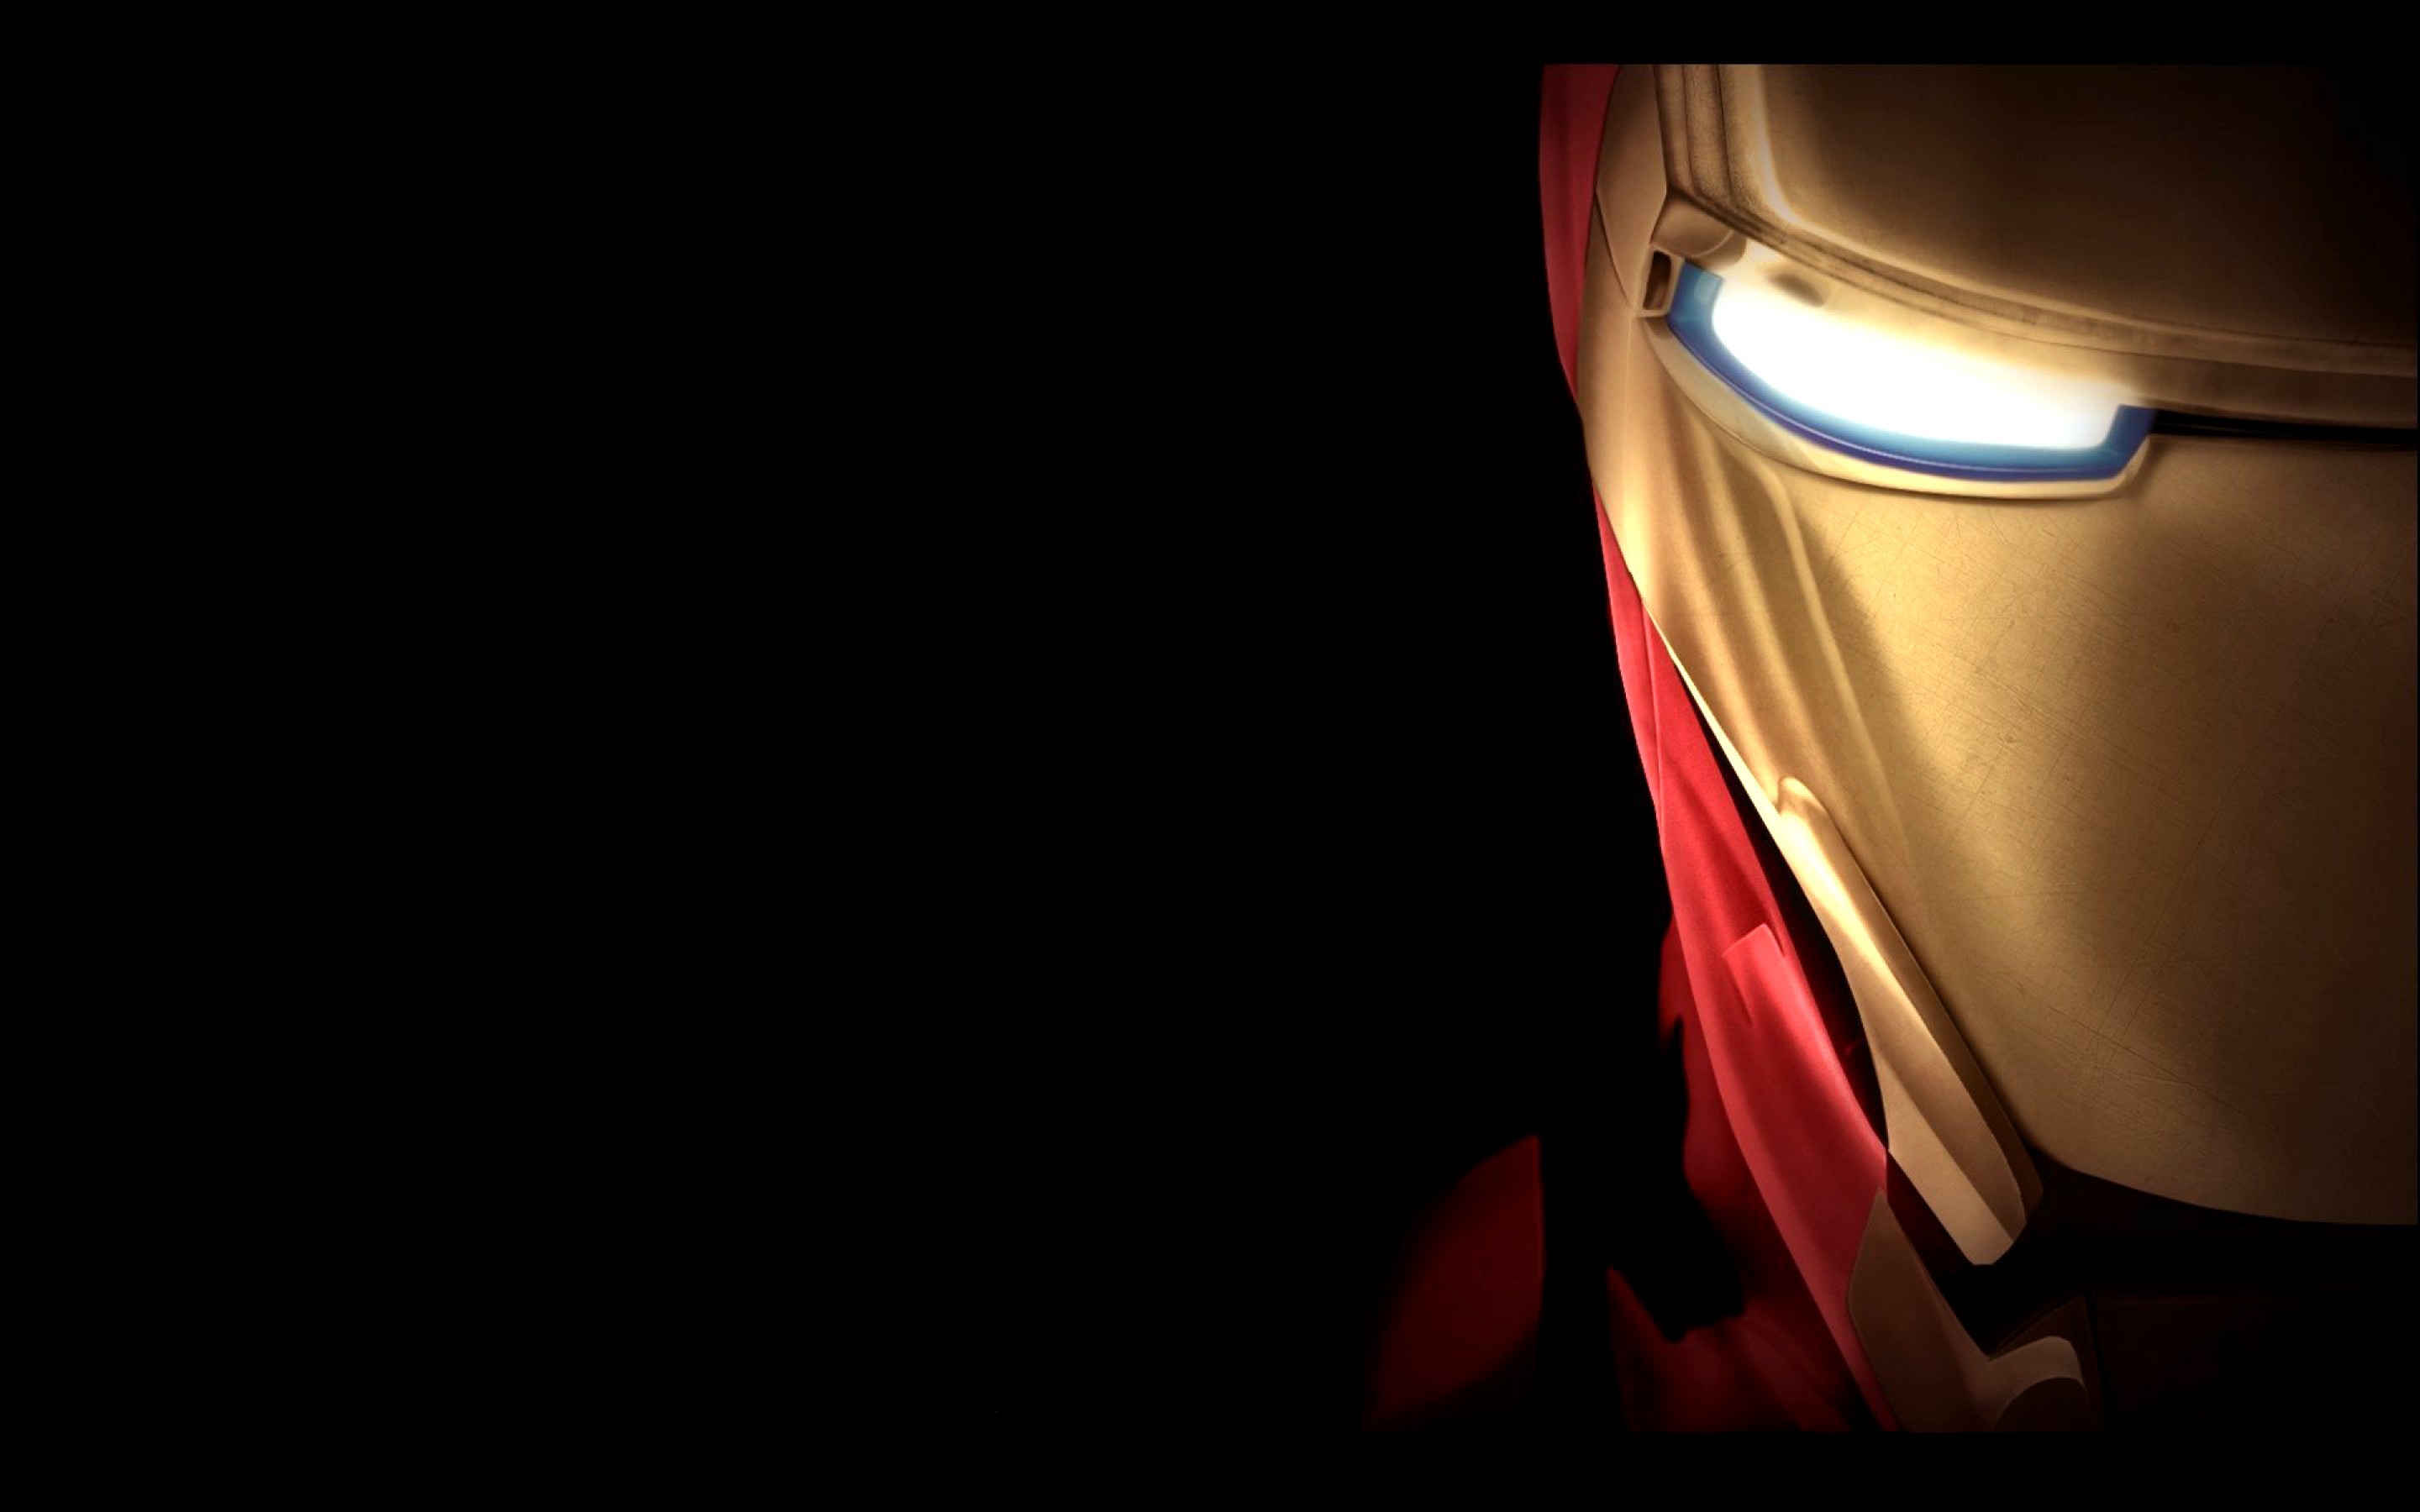 Desktop Wallpaper High Definition in 1080p with Iron Man Photos